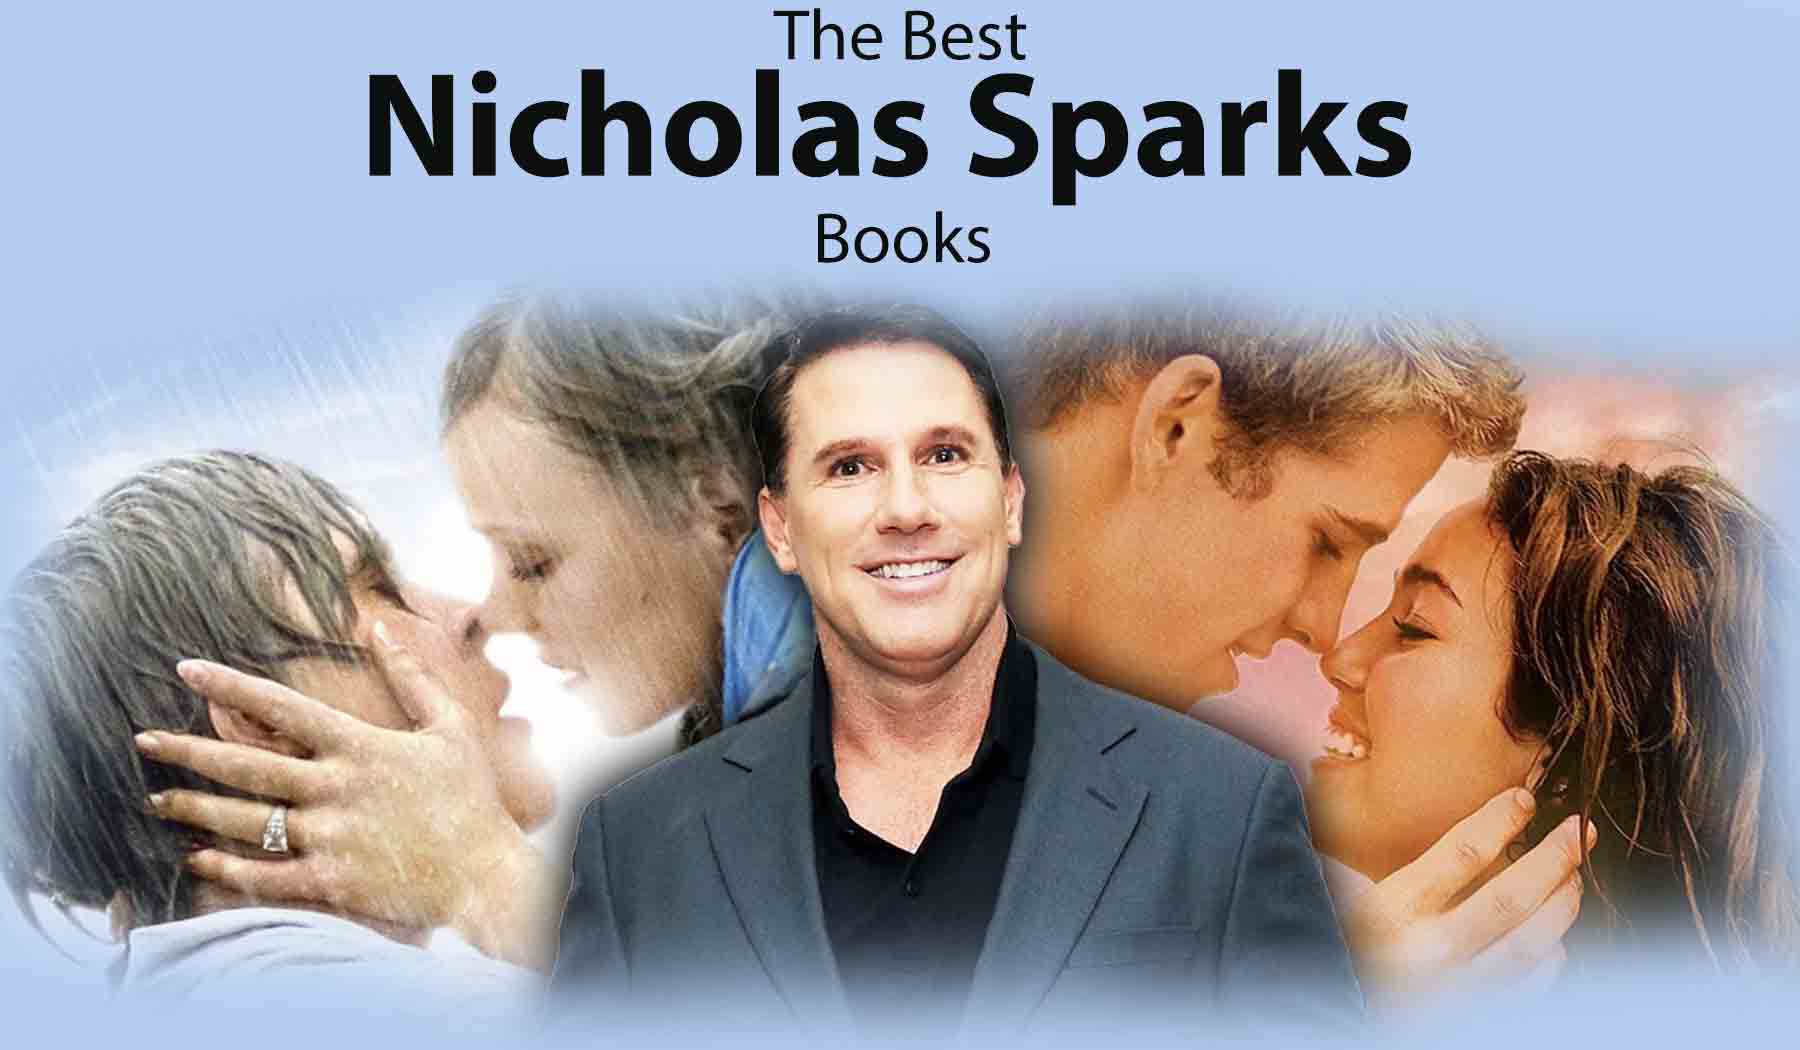 The Best Nicholas Books